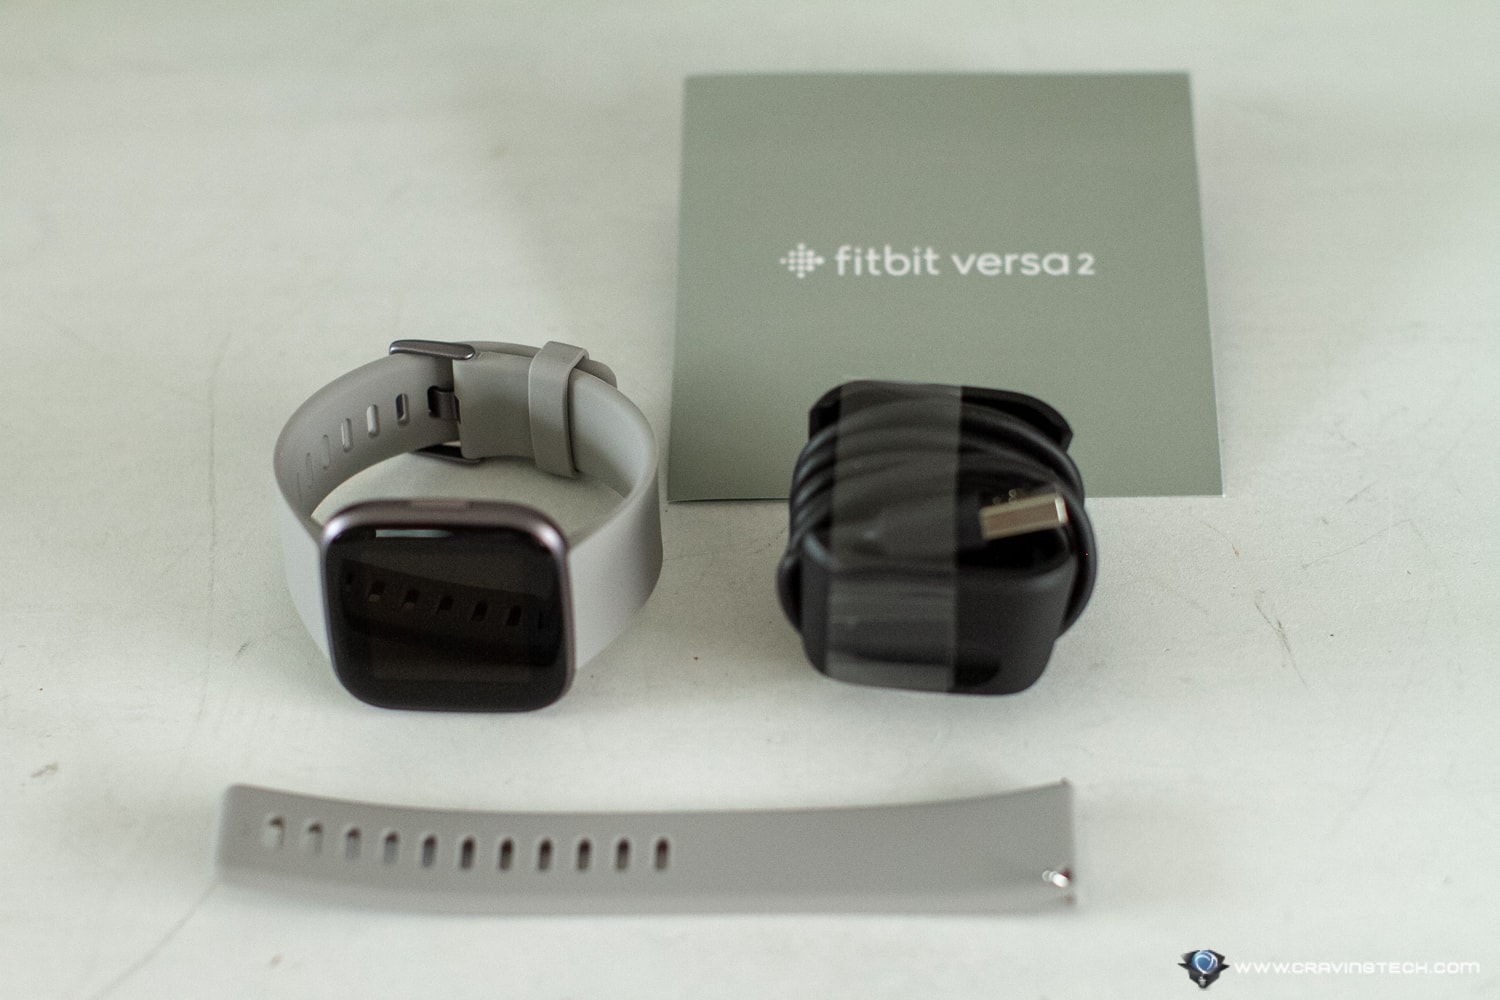 Fitbit Versa 2 unboxing